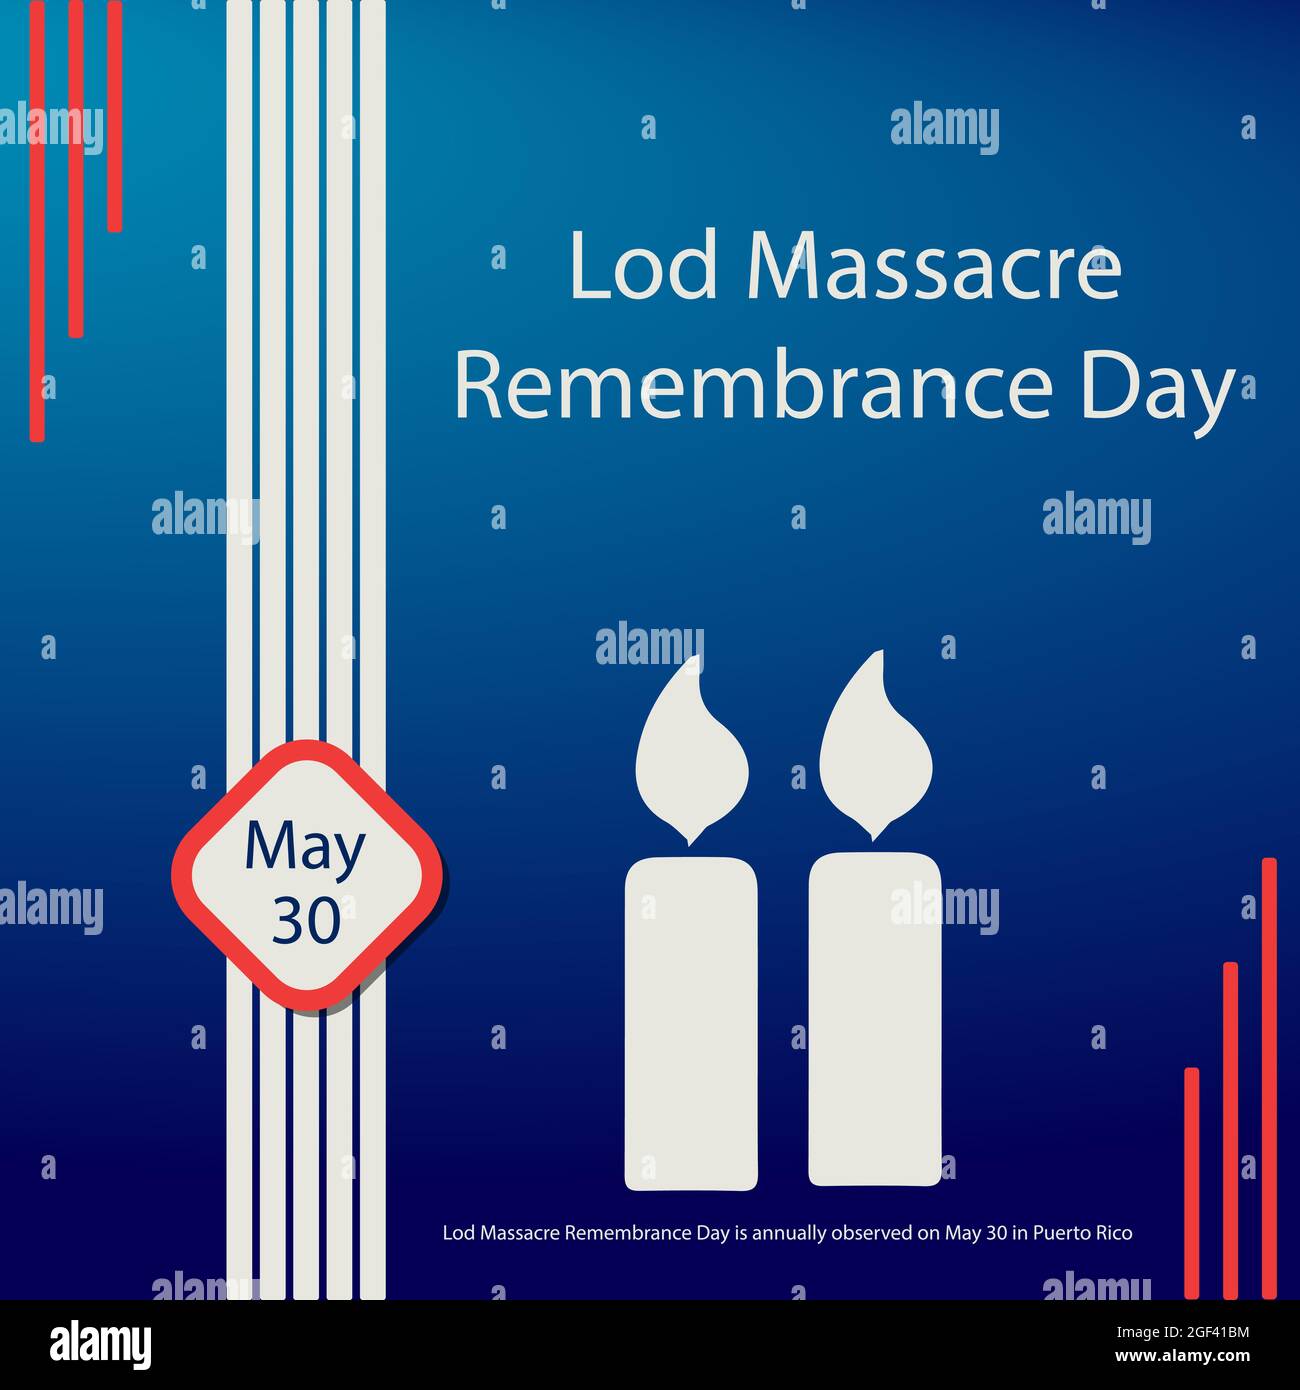 LOD Massacre Remembrance Day wird jährlich am 30. Mai in Puerto Rico begangen. Stock Vektor